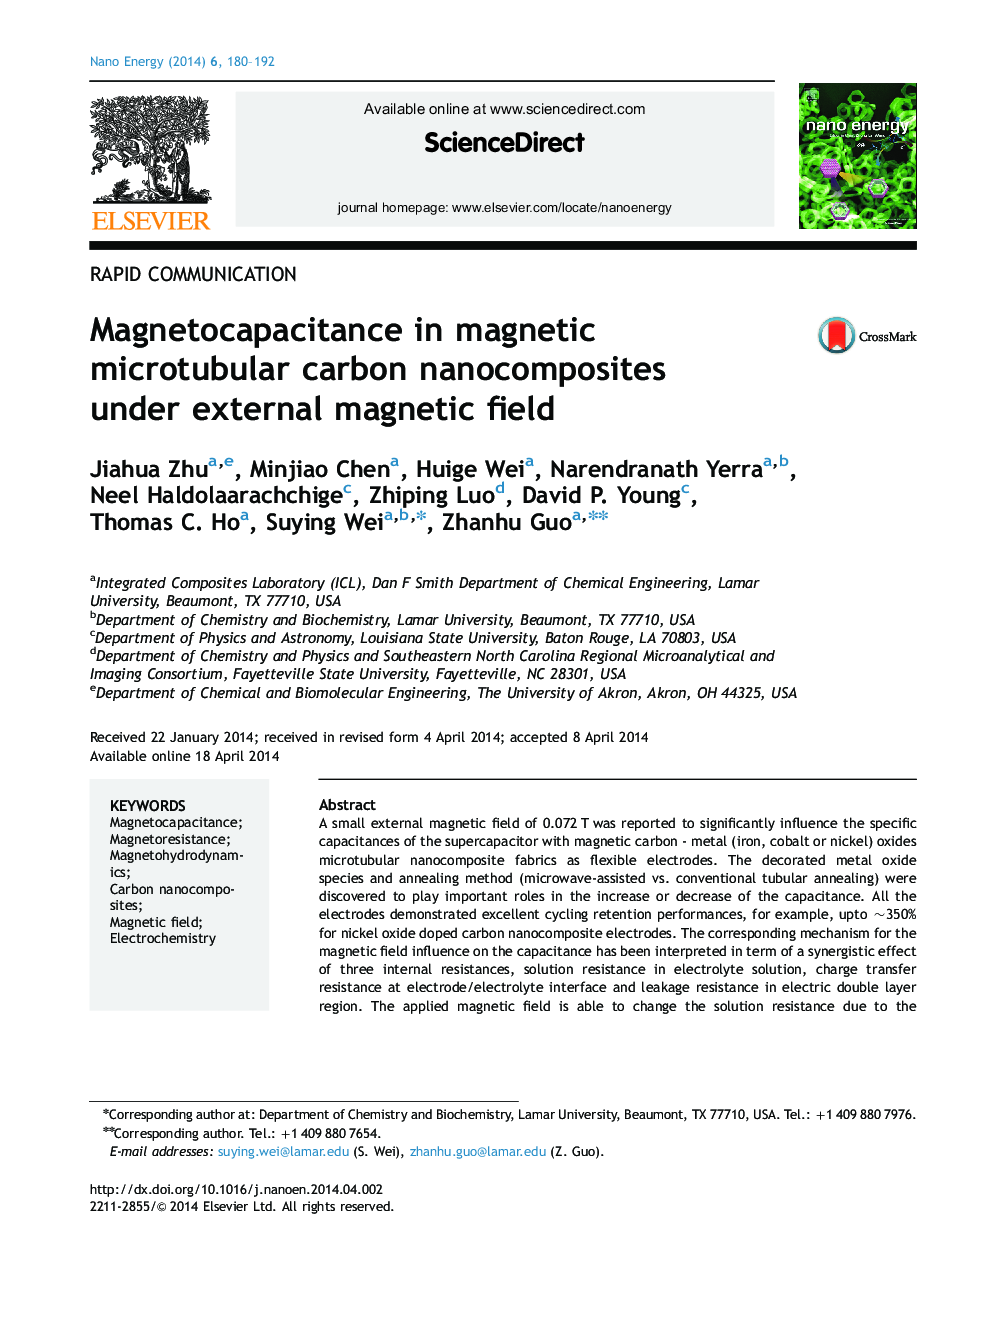 Magnetocapacitance in magnetic microtubular carbon nanocomposites under external magnetic field